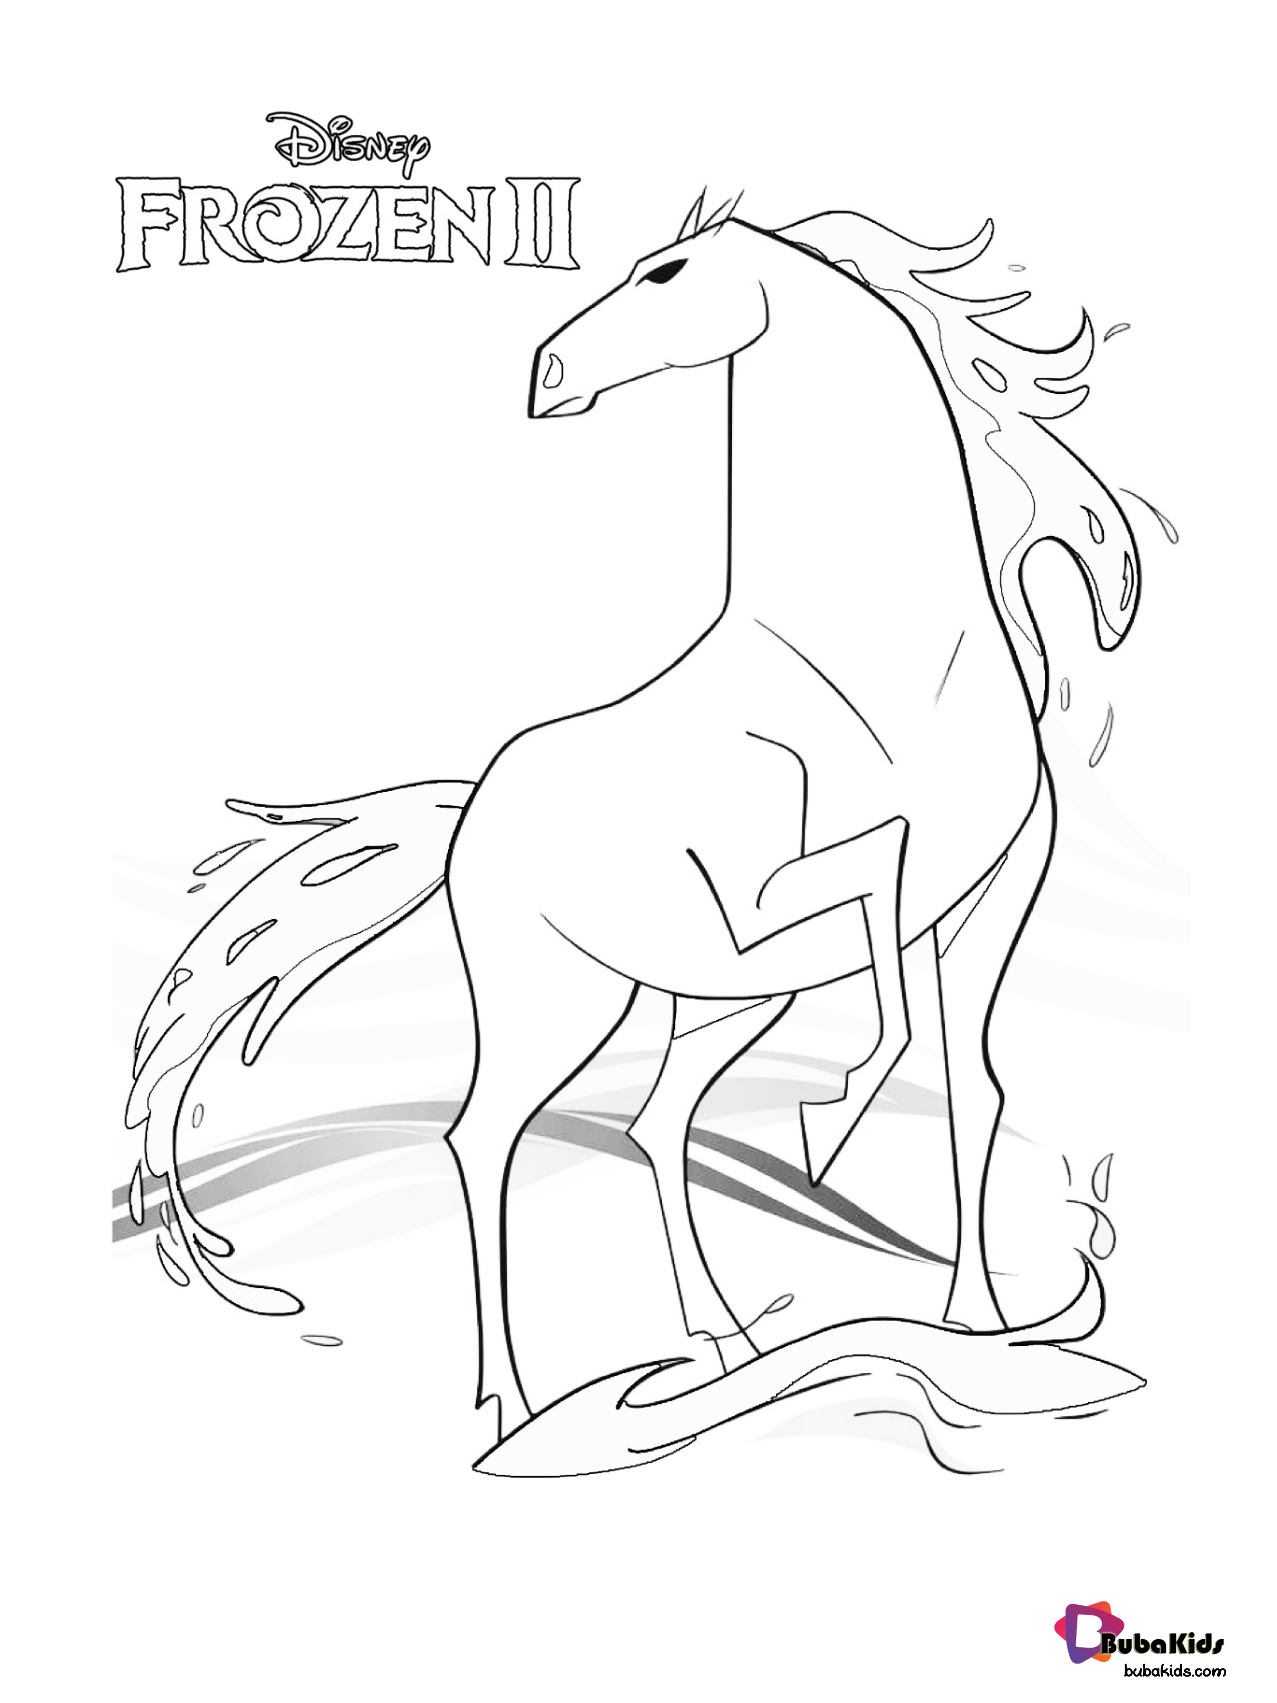 Frozen 2 Nokk the magic horse coloring page. Wallpaper